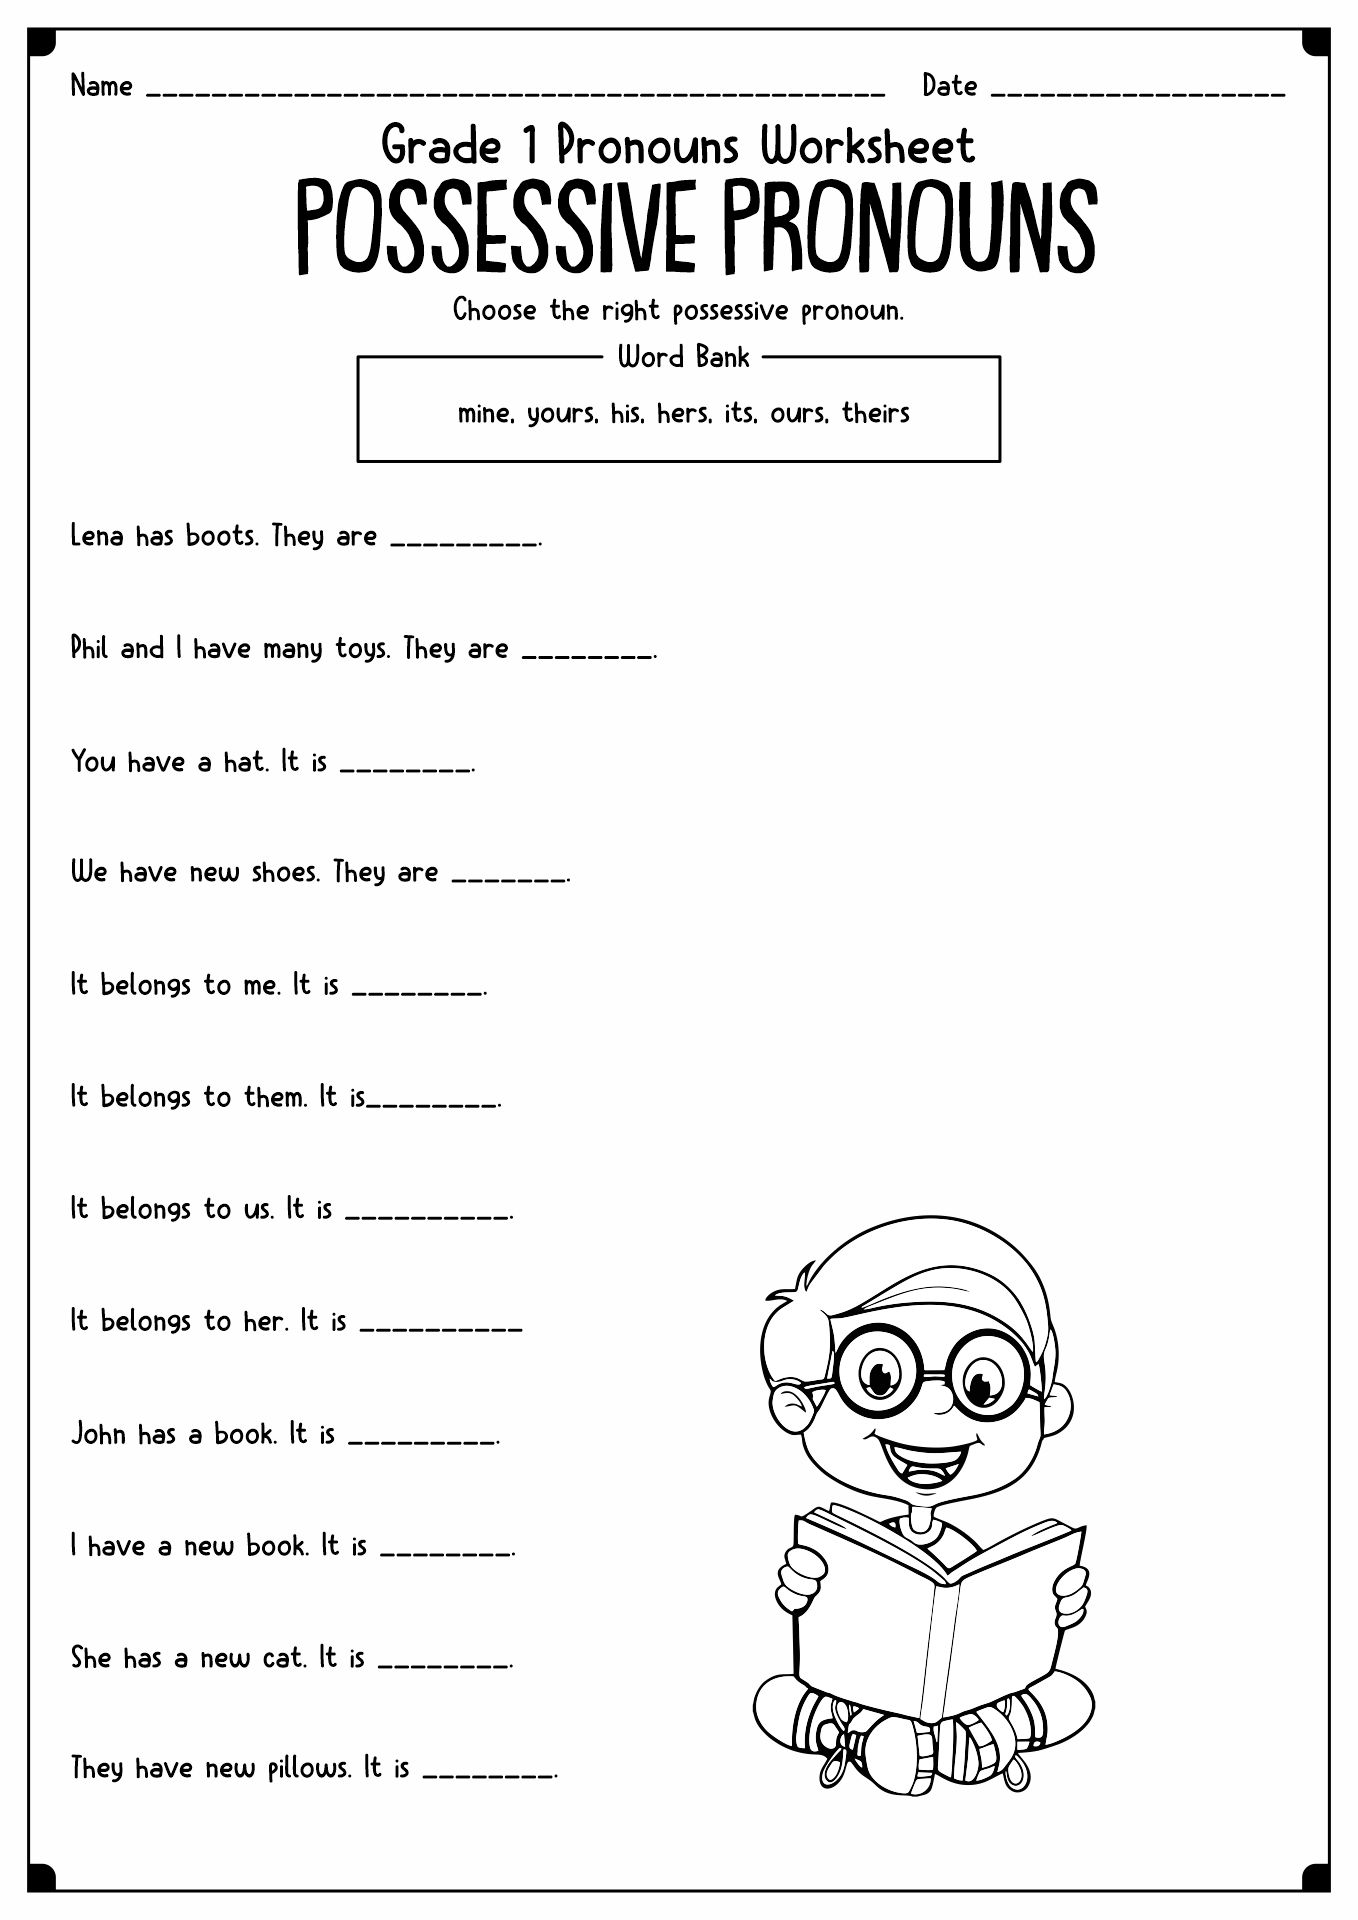 Personal Pronouns Worksheets 1st Grade Image